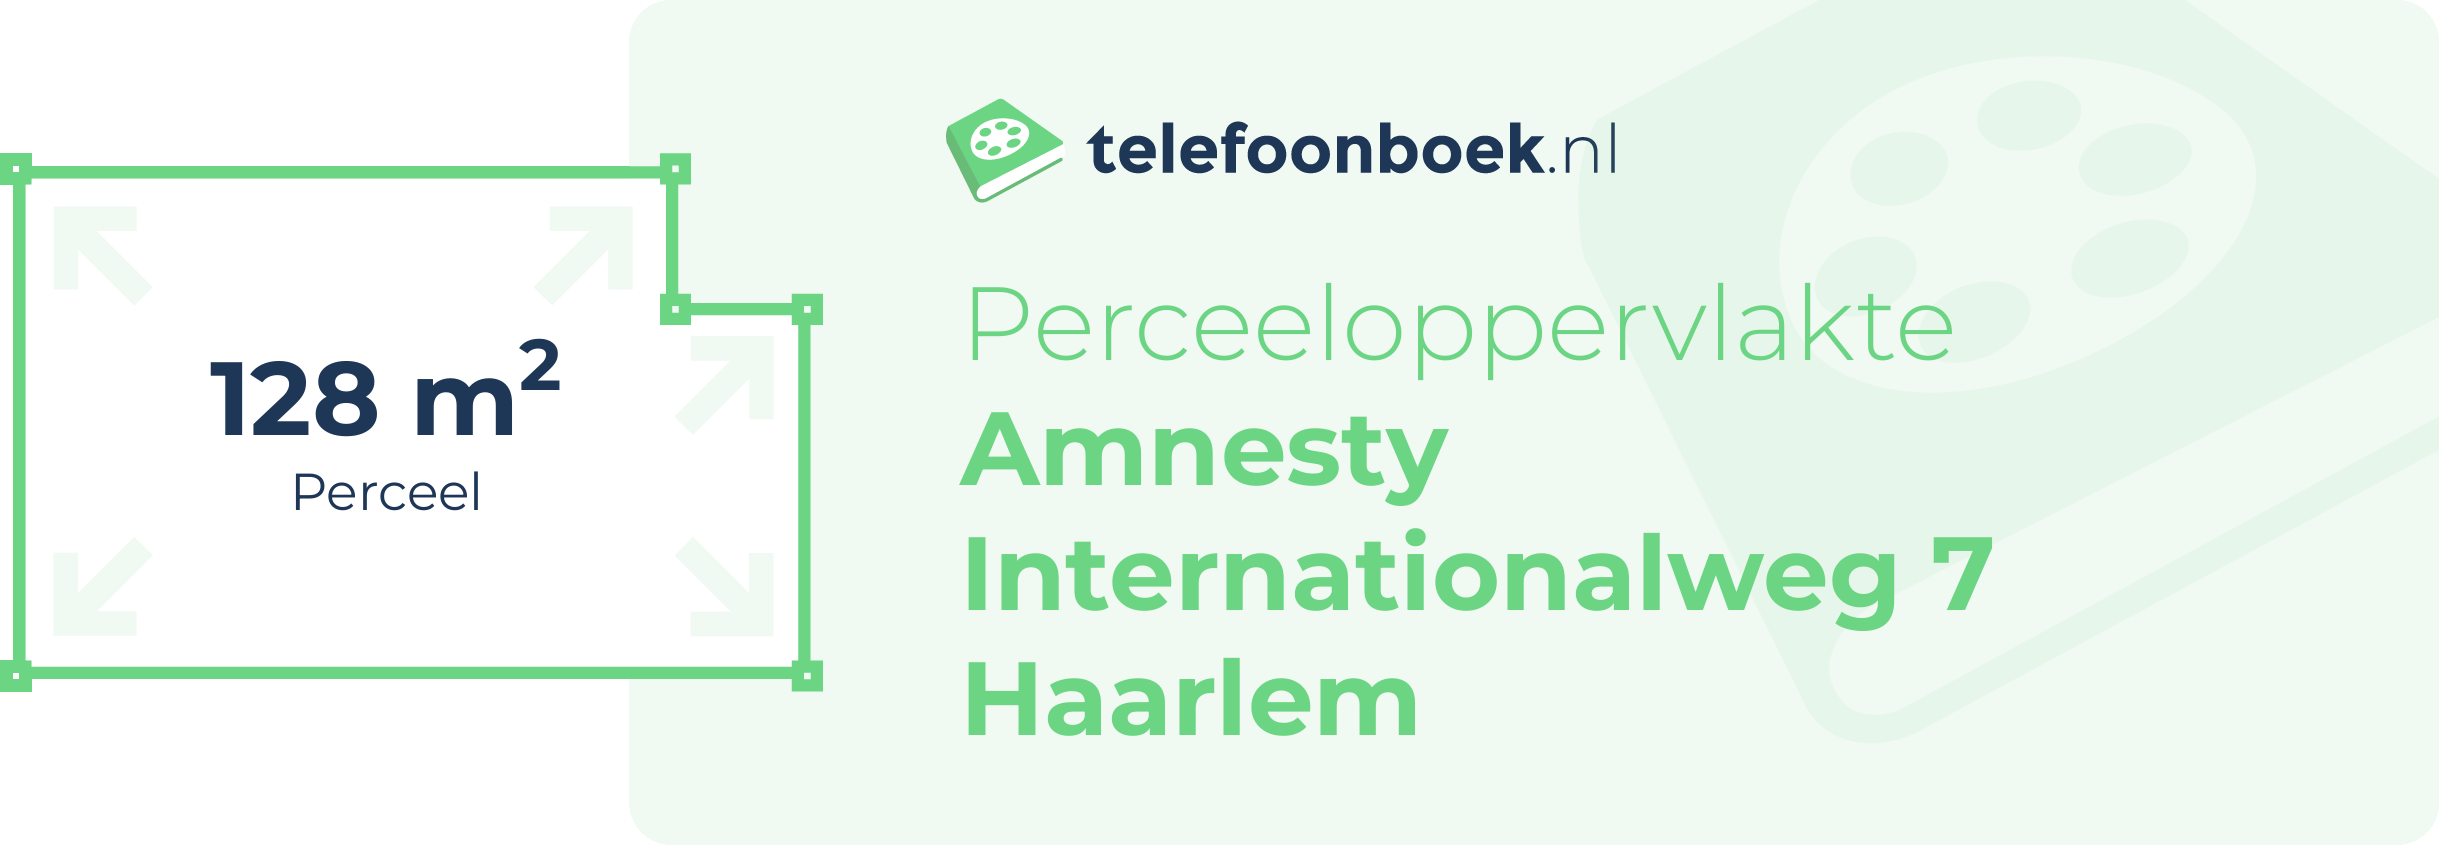 Perceeloppervlakte Amnesty Internationalweg 7 Haarlem